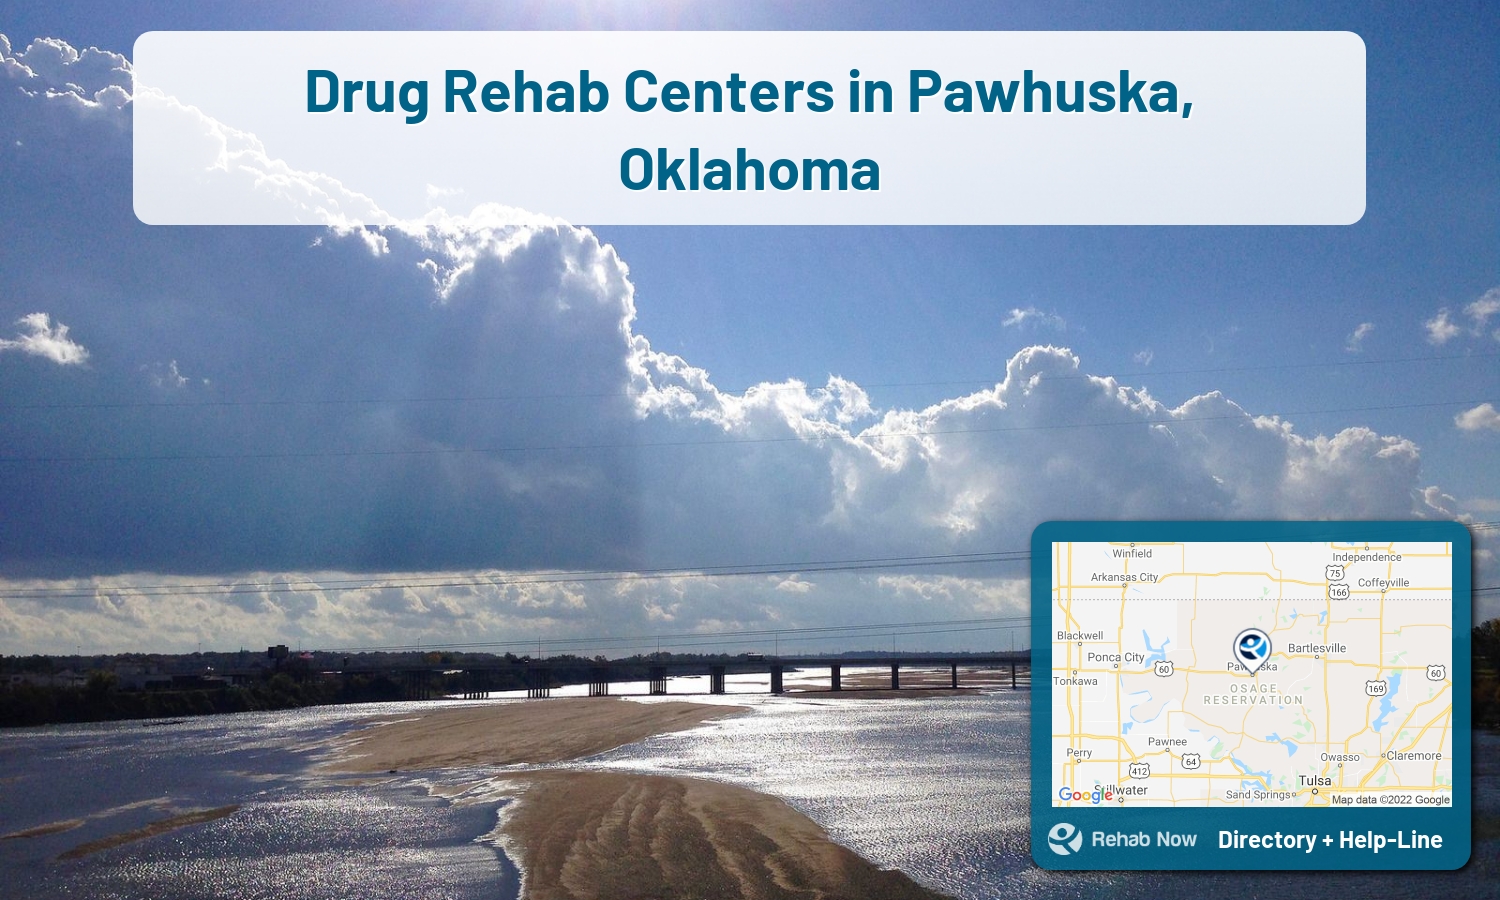 Pawhuska, OK Treatment Centers. Find drug rehab in Pawhuska, Oklahoma, or detox and treatment programs. Get the right help now!